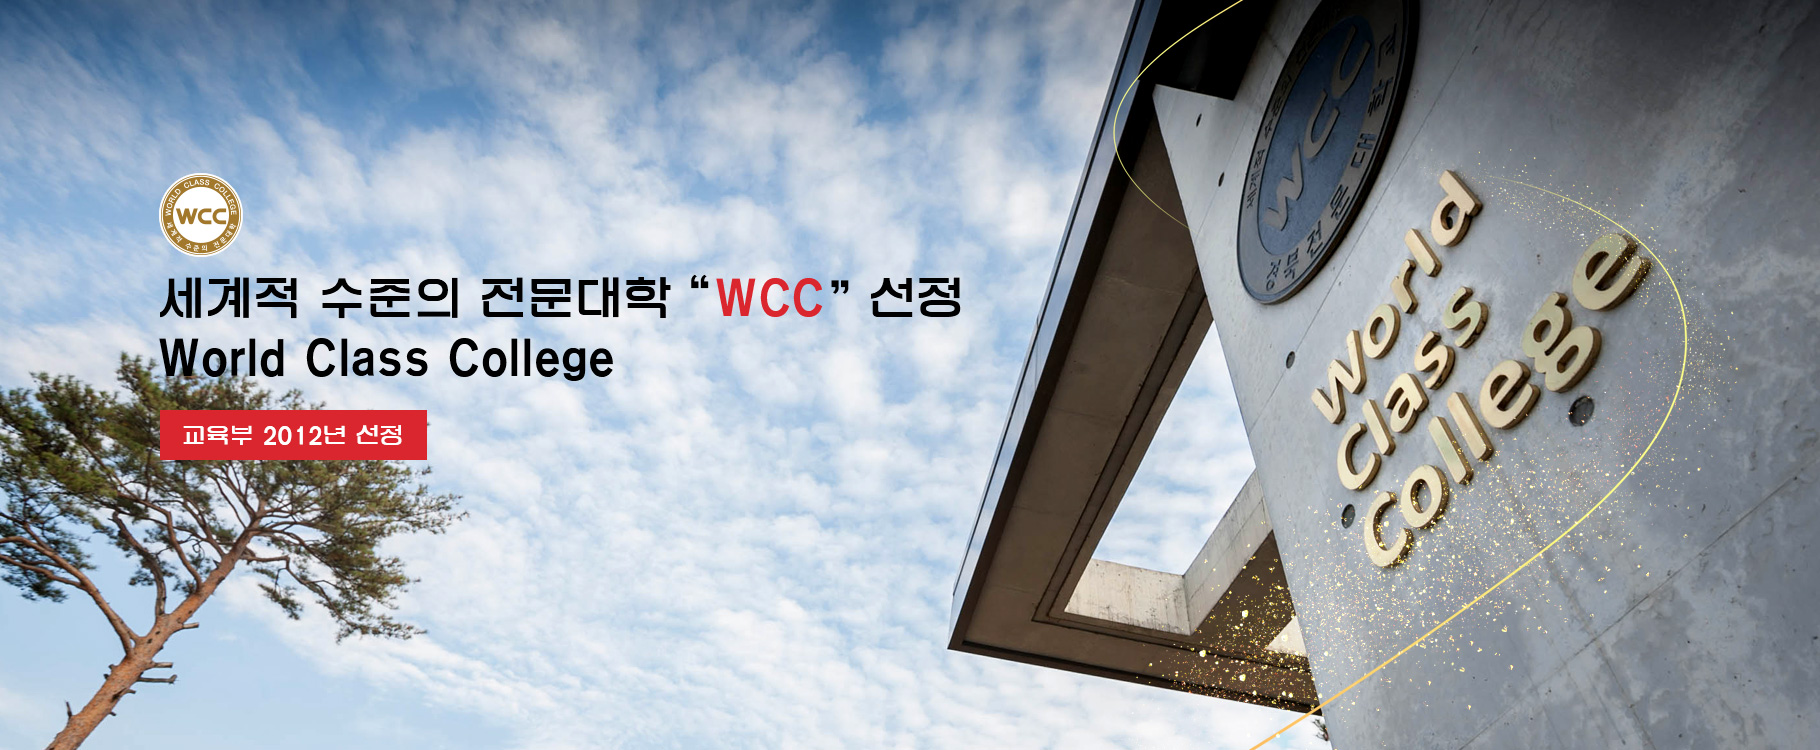 WCC로고
세계적 수준의 전문대학 “WCC” 선정 World Class College(교육부 2012년 선정)